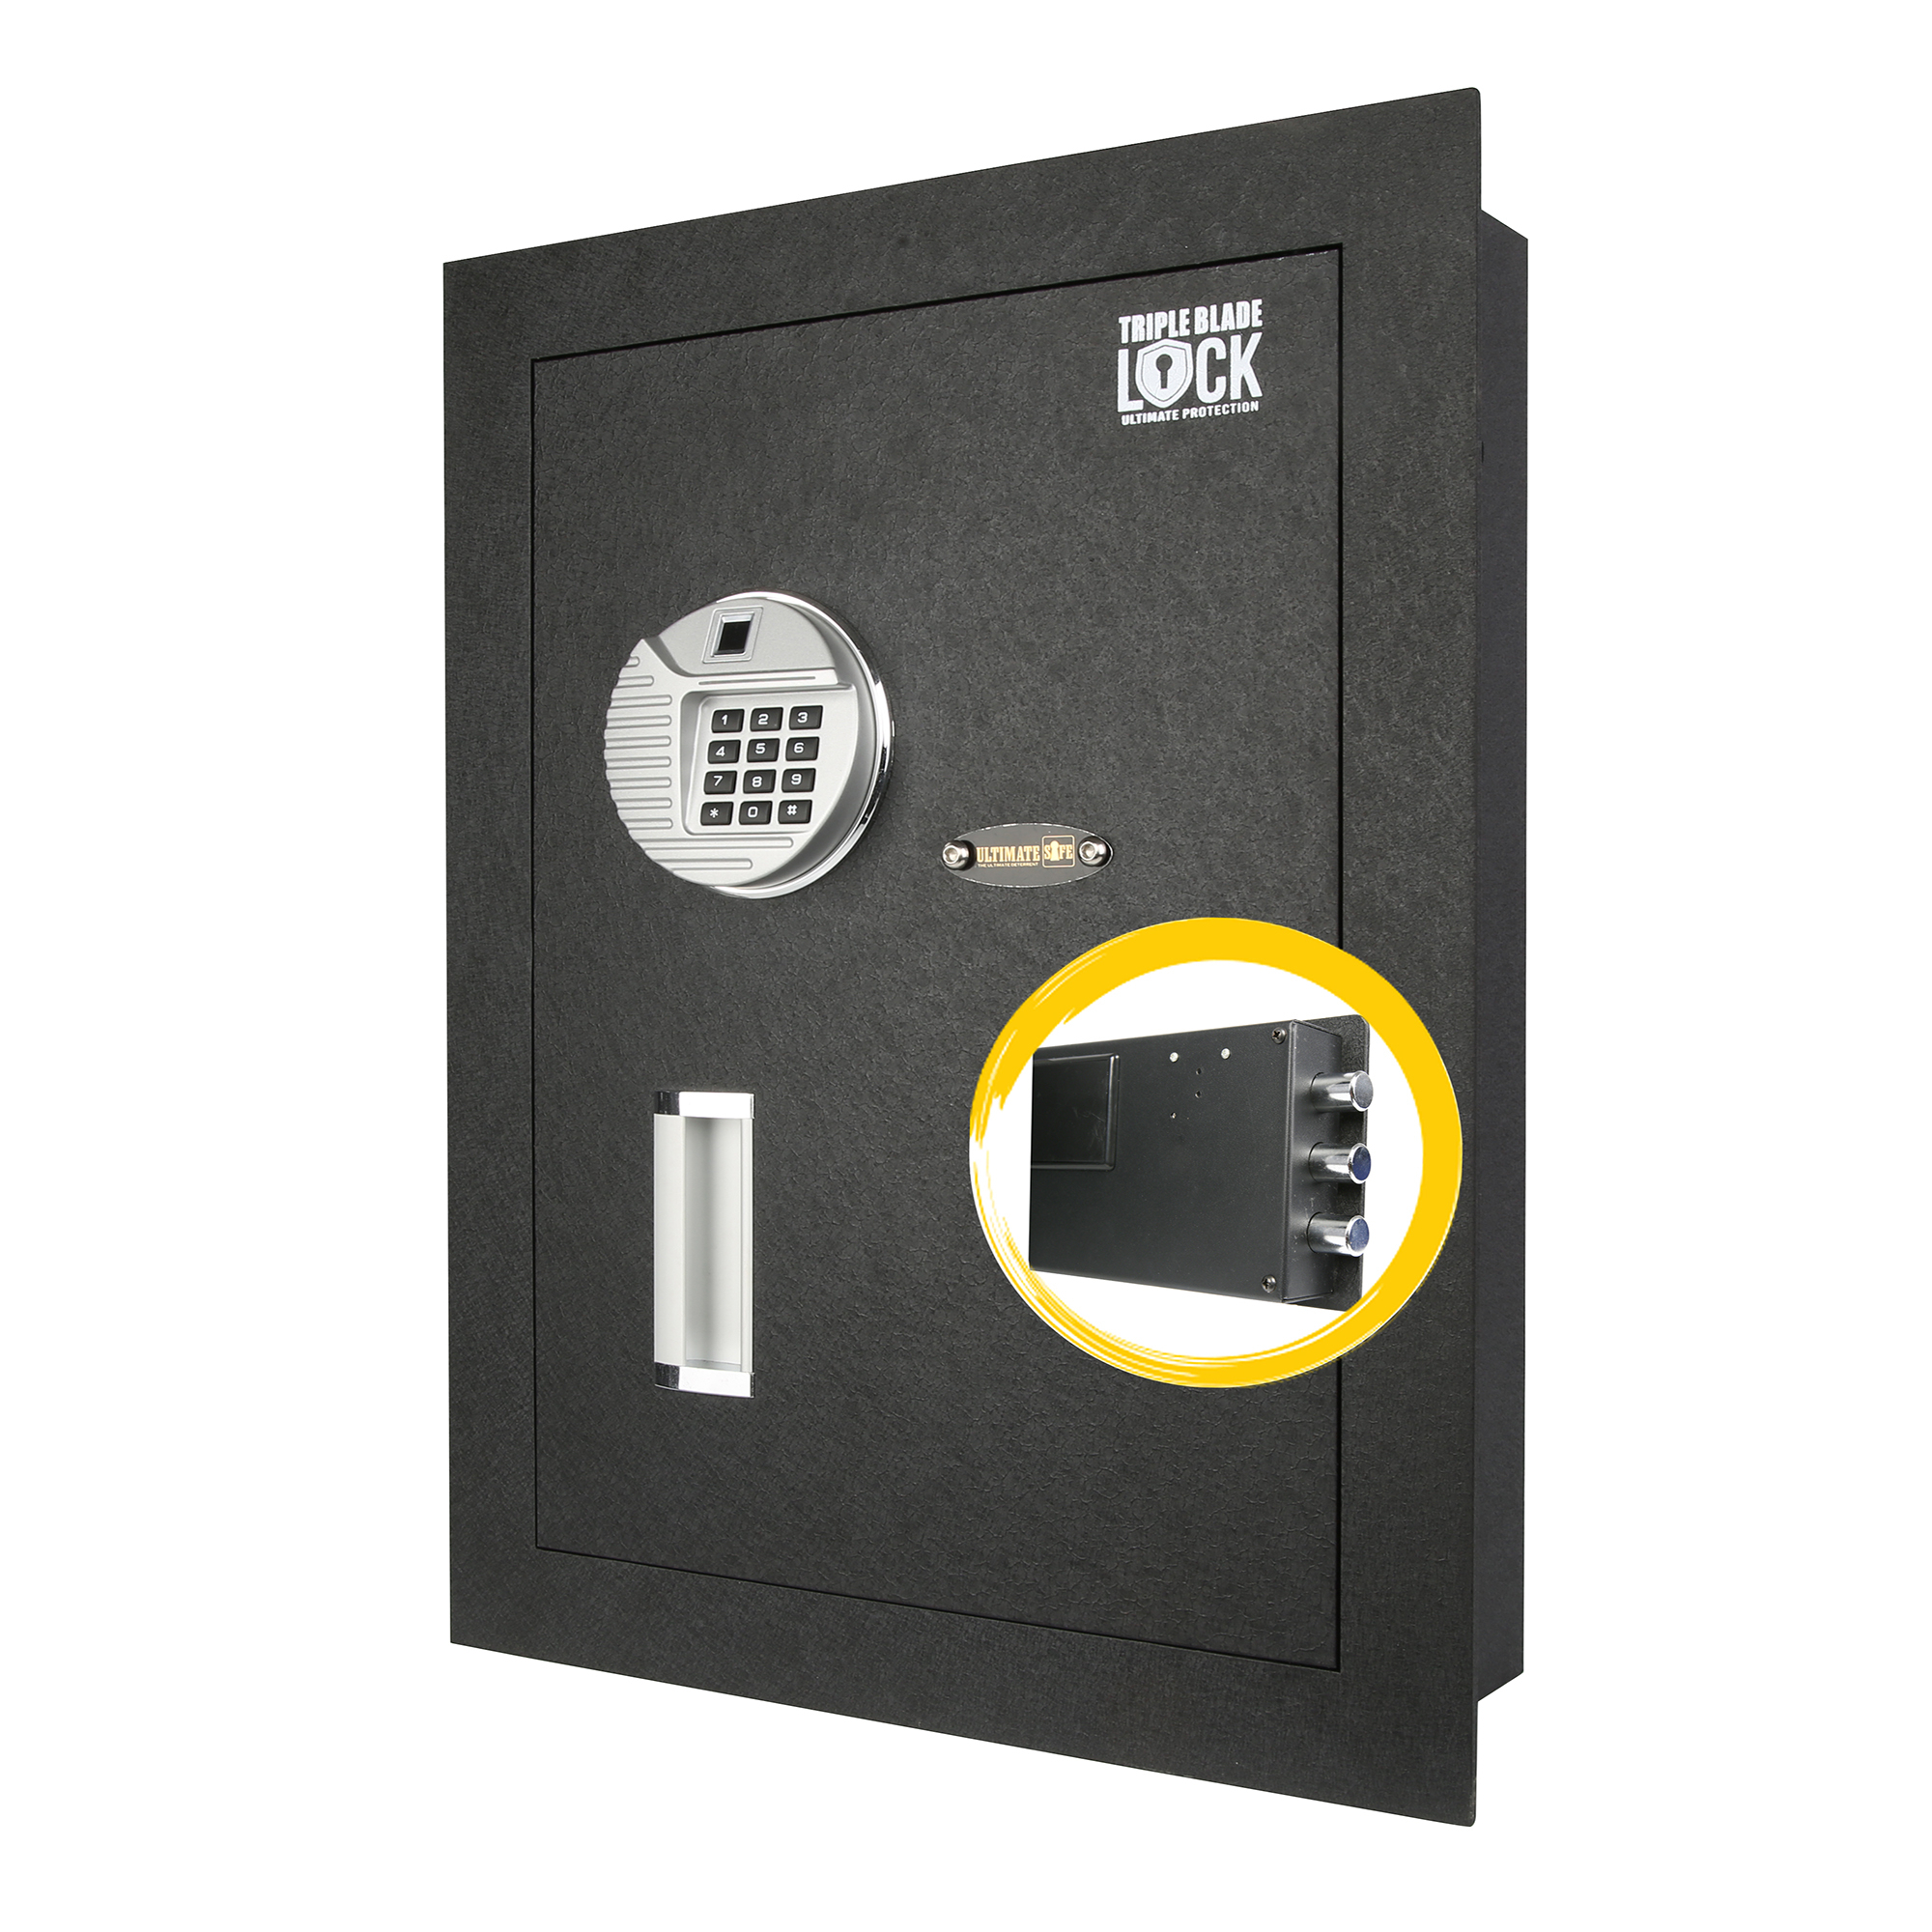 Ultimate Safe Hidden In Wall Safe With Biometric Fingerprint Sensor And Triple Blade Lock